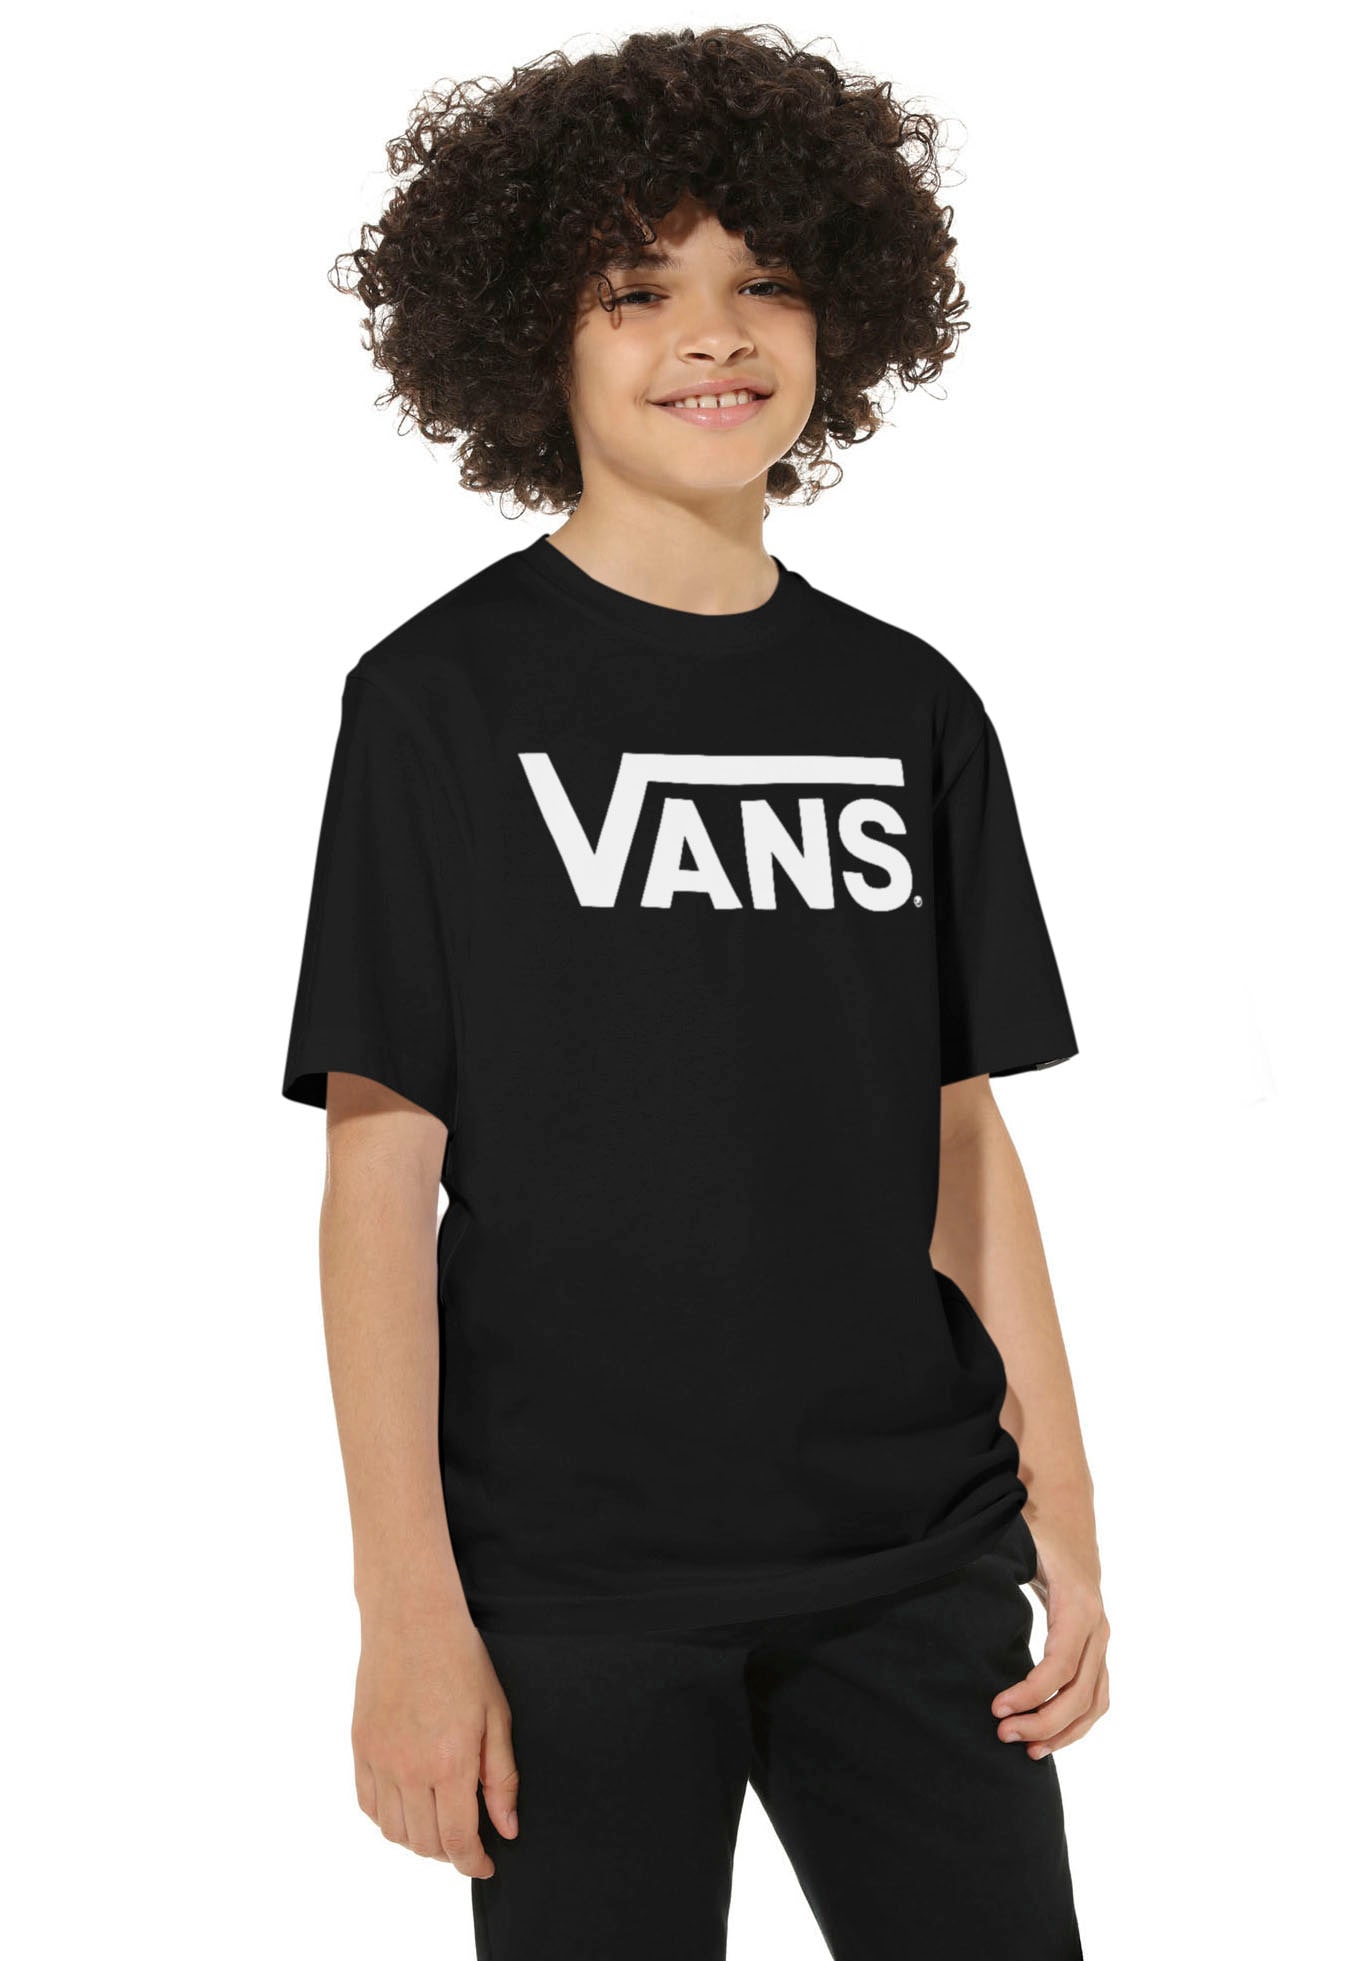 CLASSIC bei T-Shirt Vans »VANS BOYS«